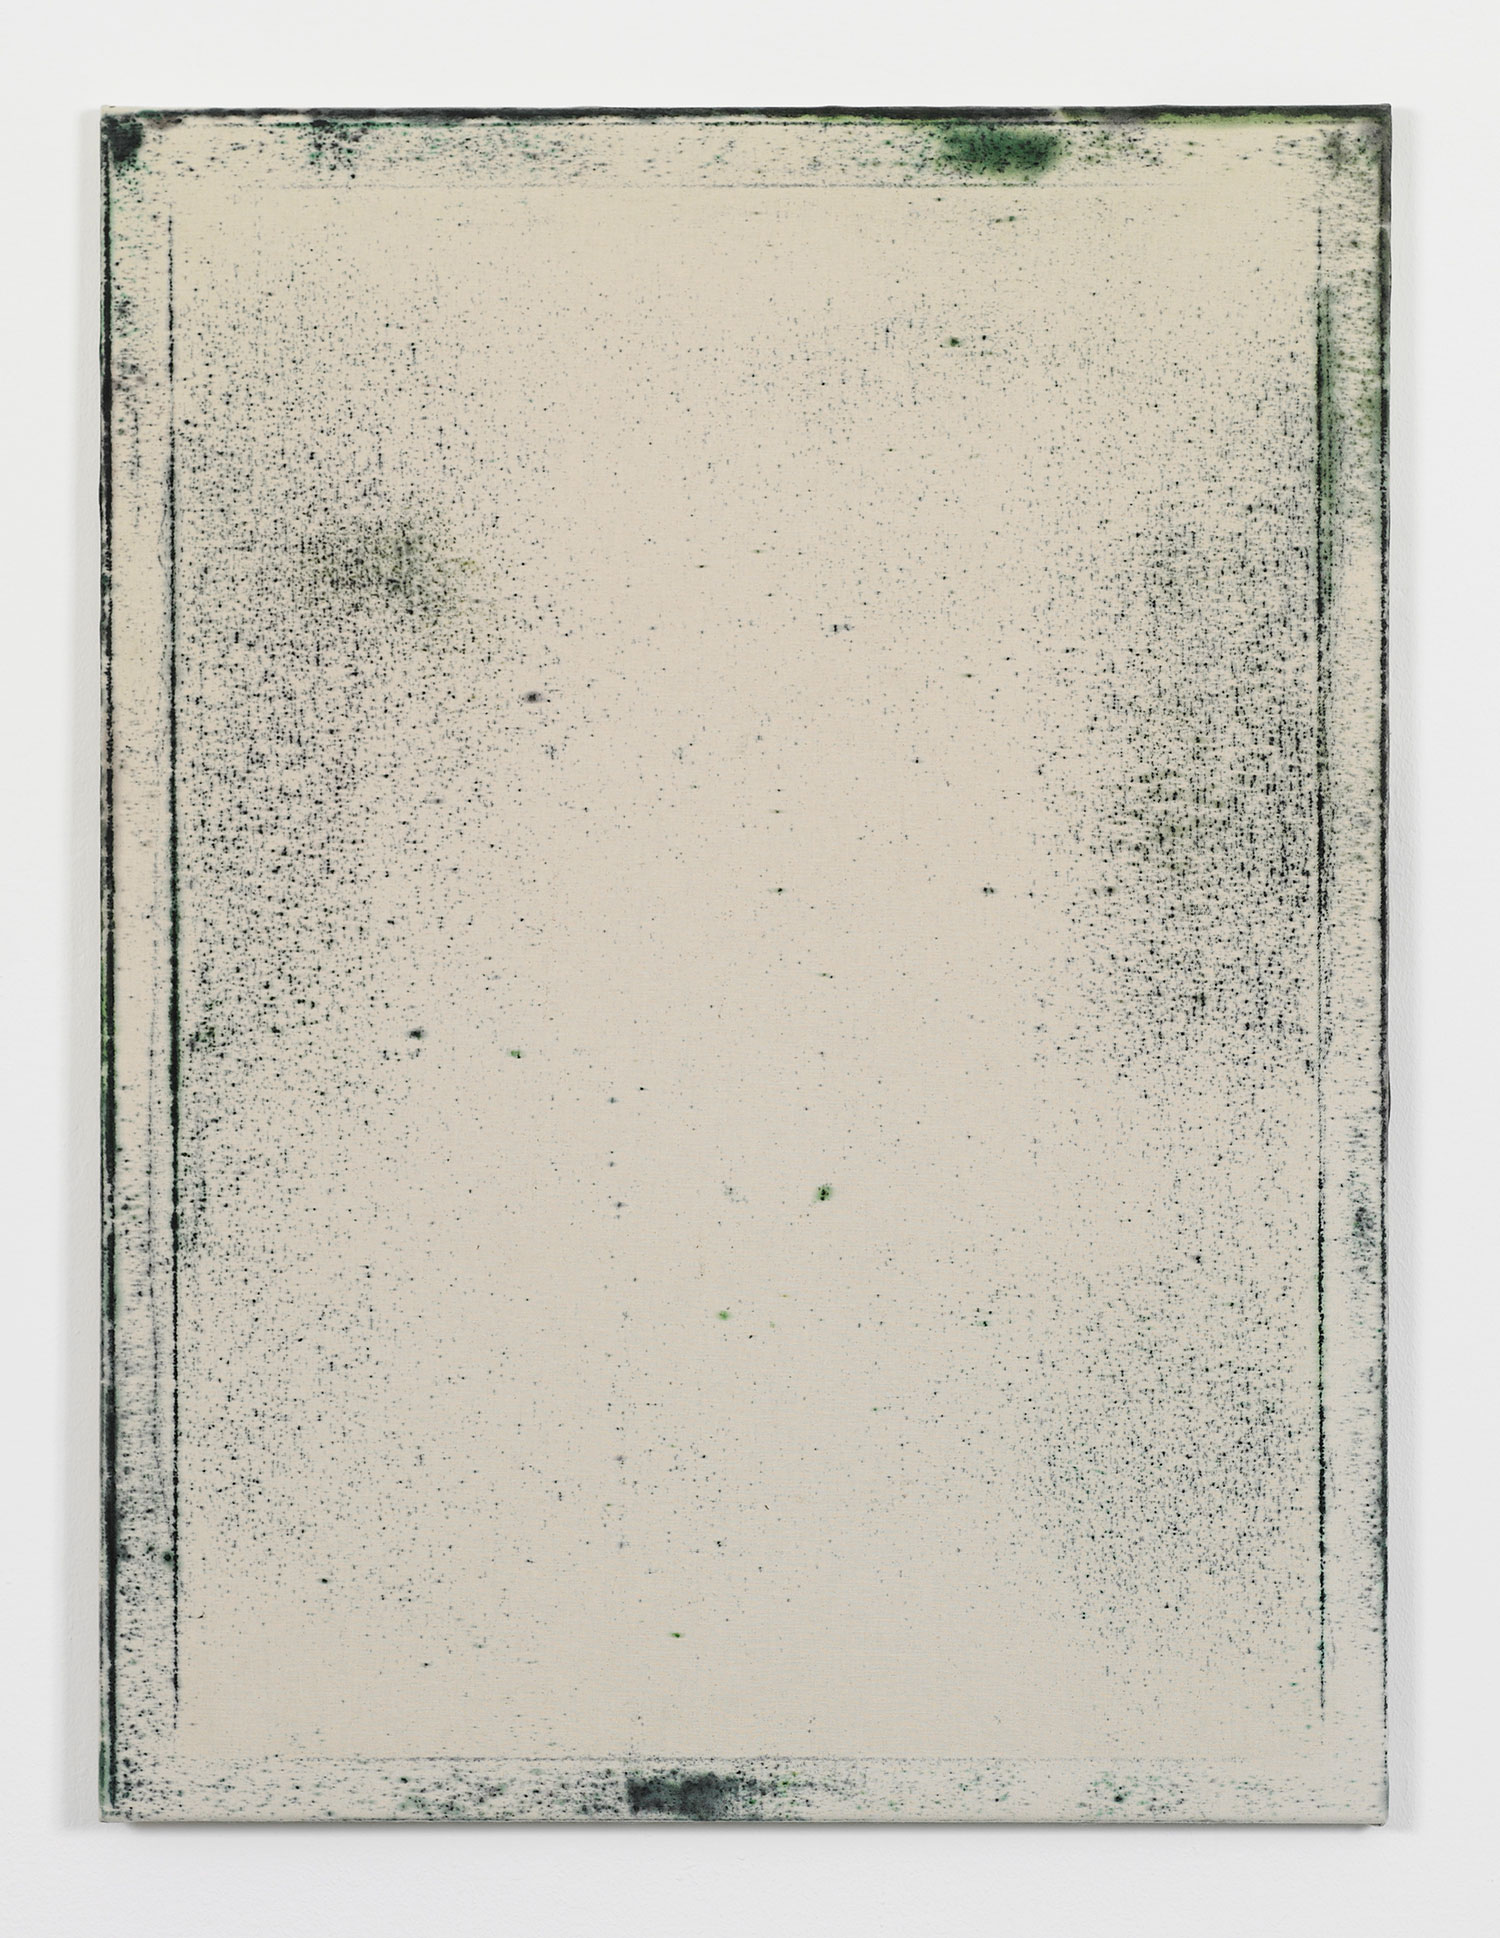  waterhome screen 2012, 100 x 75 cm. oil on canvas 